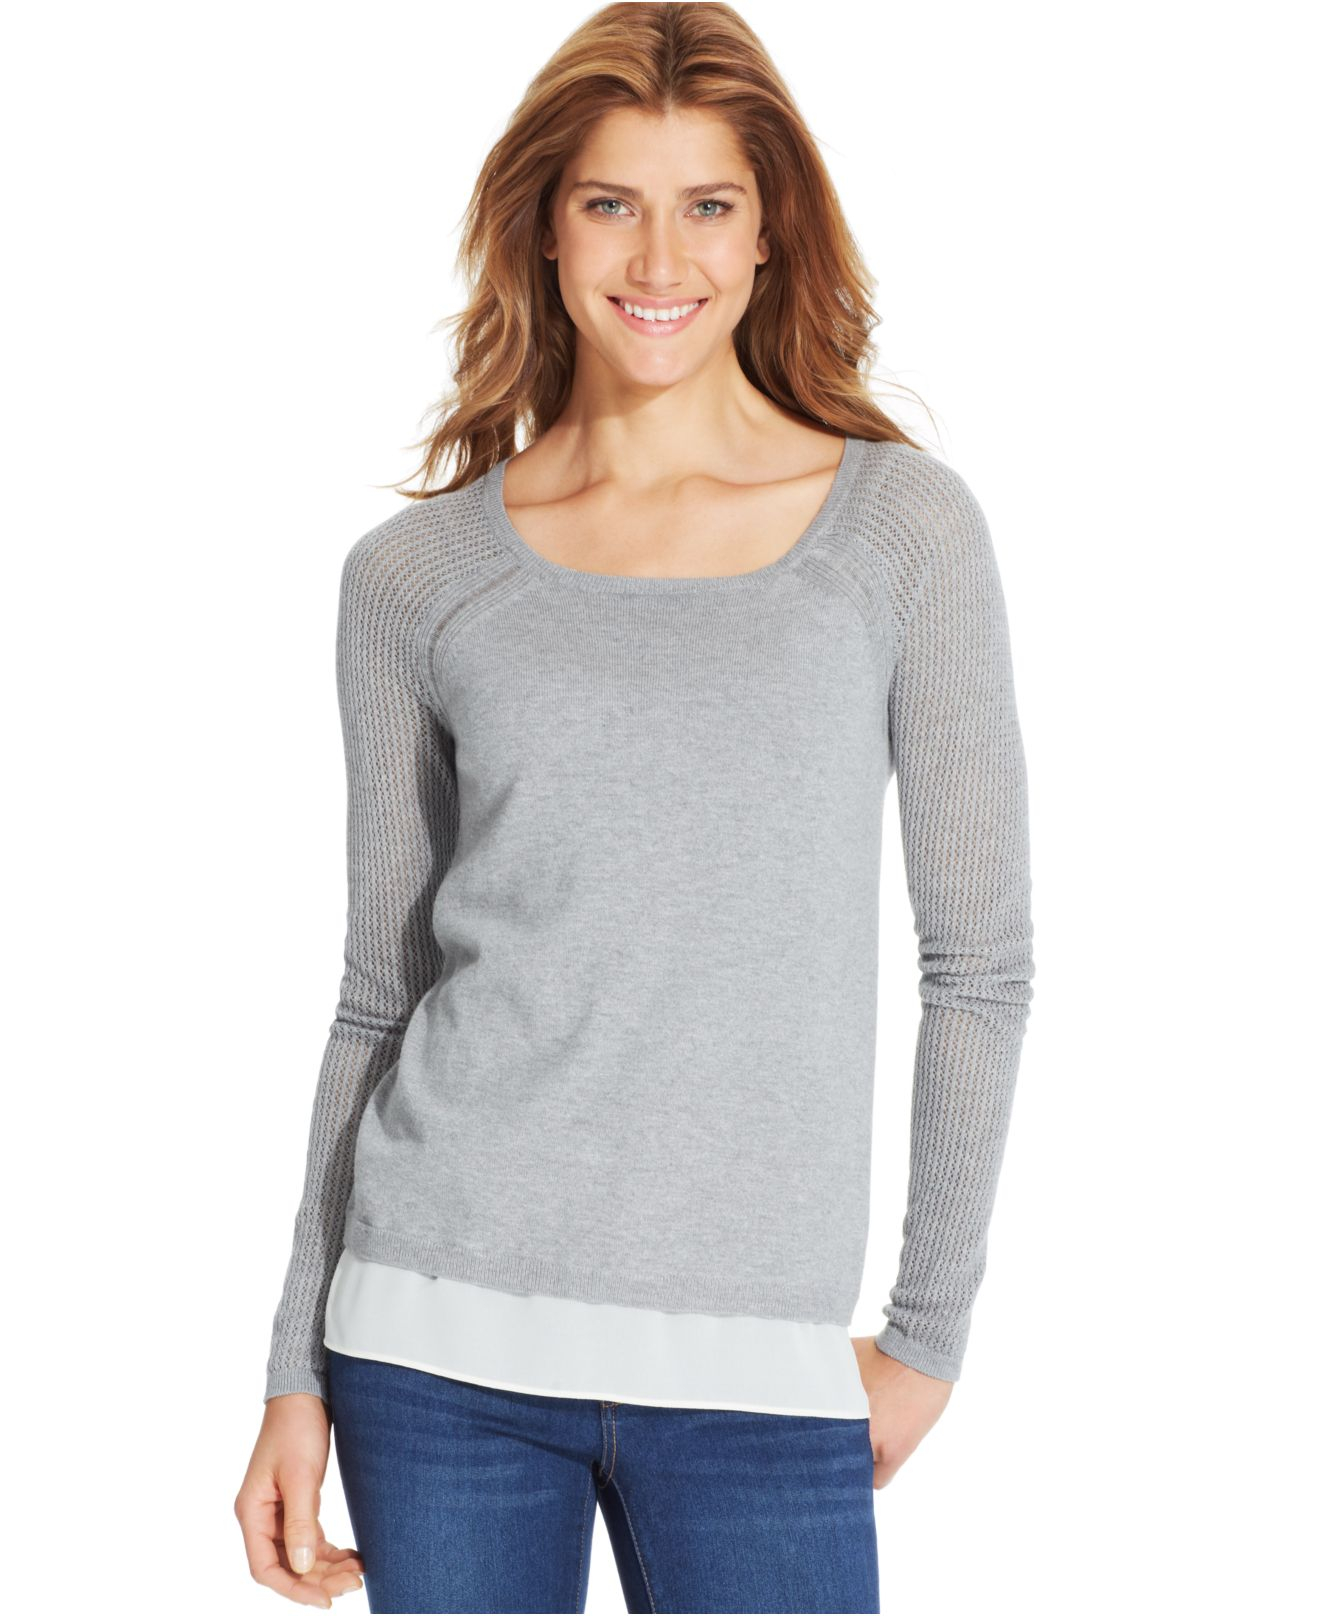 Lyst - Dkny Layered-Look Mixed-Media Sweater in Gray